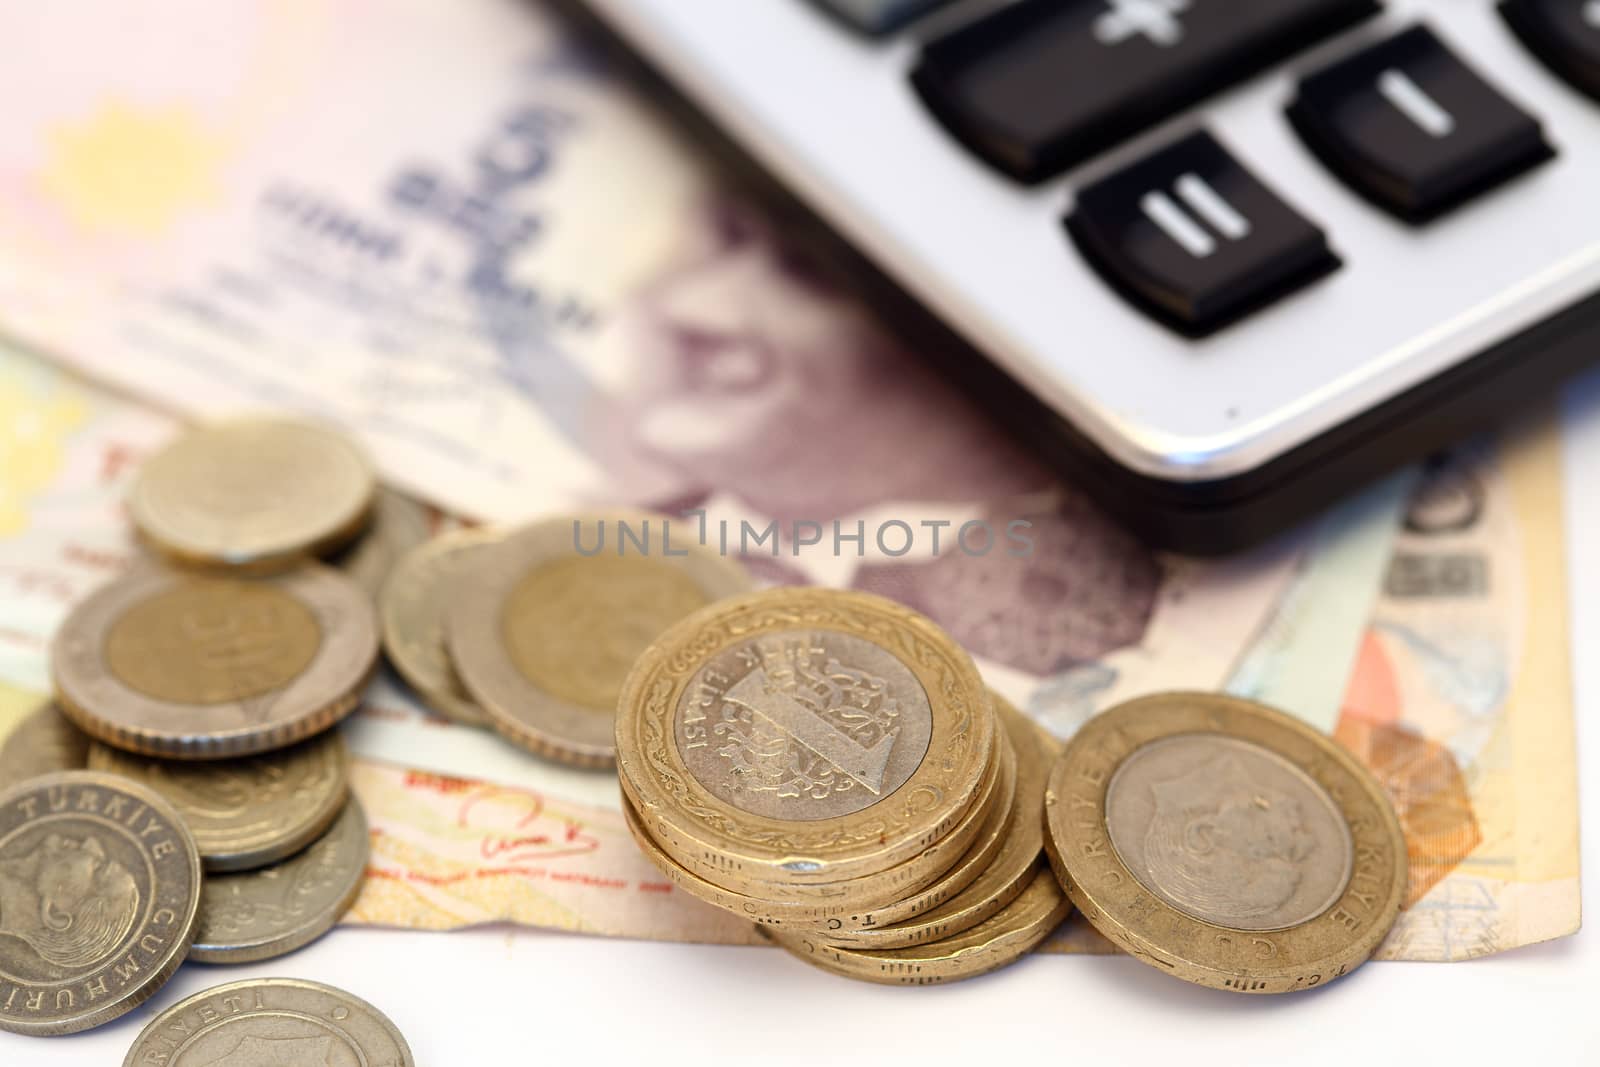 Turkish lira bills, coins and calculator close up, shallow DOF